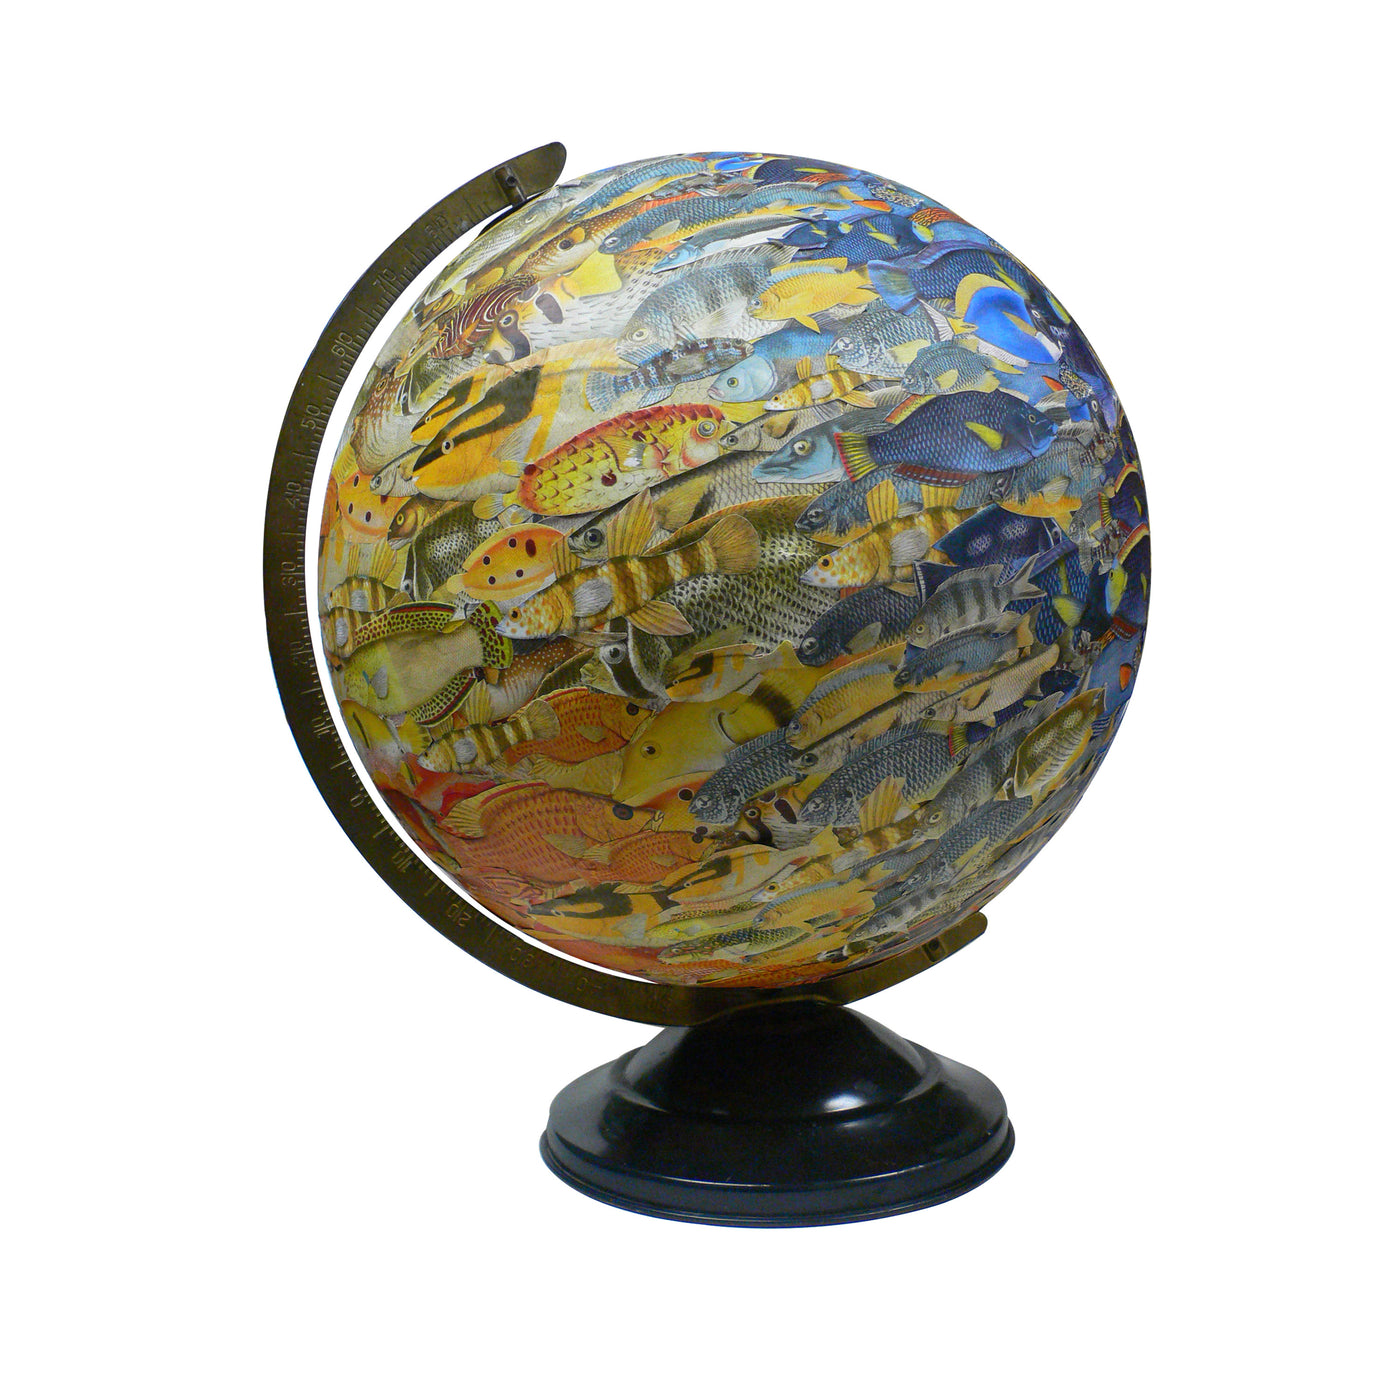 School of Fish Vintage Globe Art